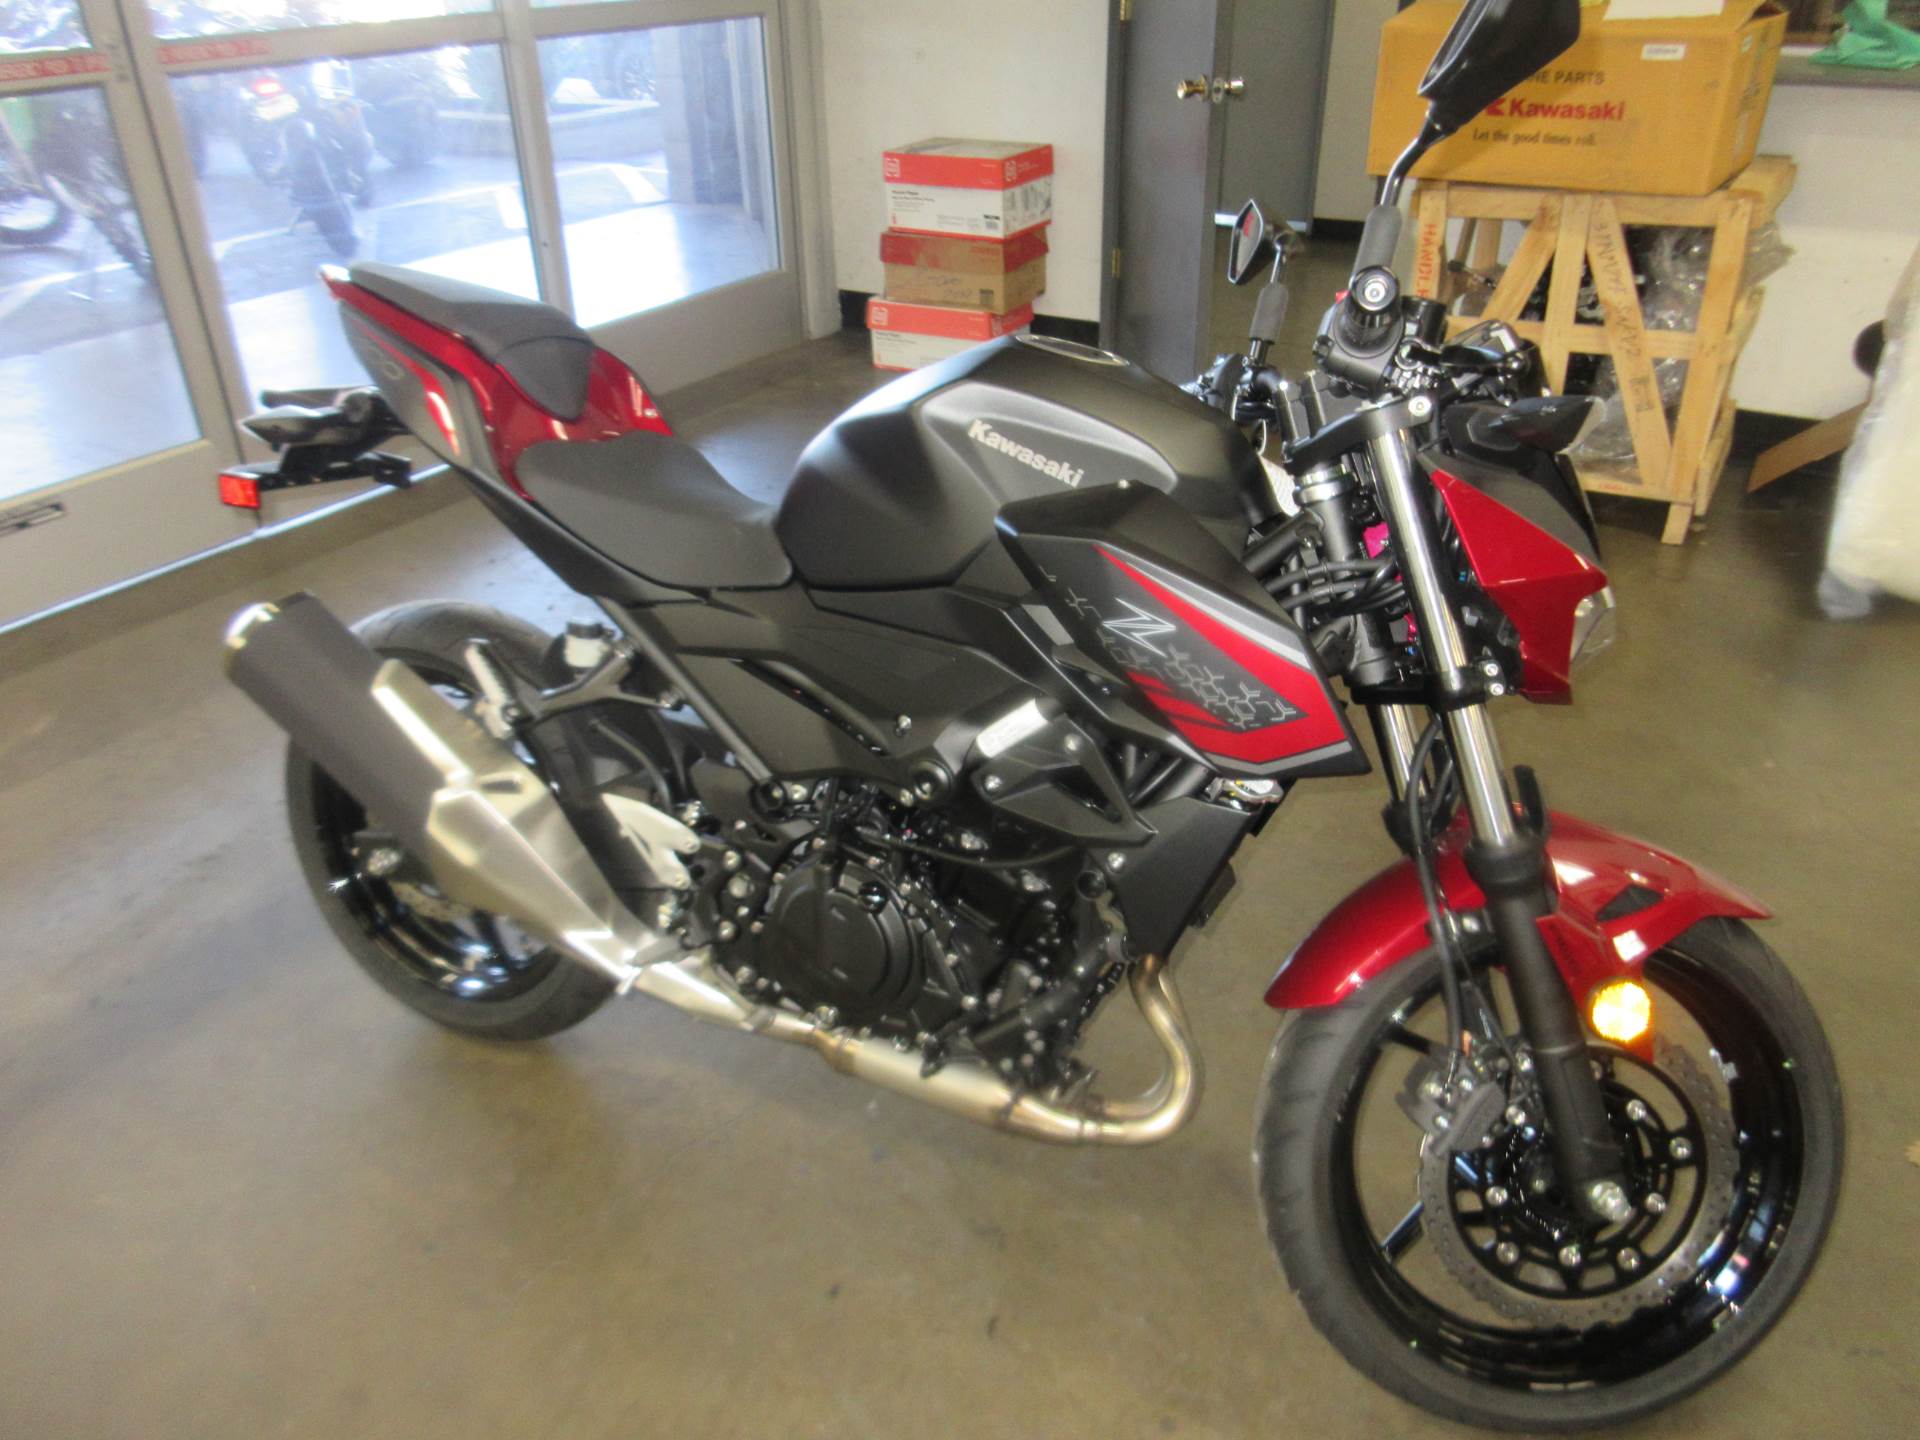 Masaccio fritaget transmission New 2021 Kawasaki Z400 ABS Motorcycles in Sacramento, CA | Stock Number:  AB5789